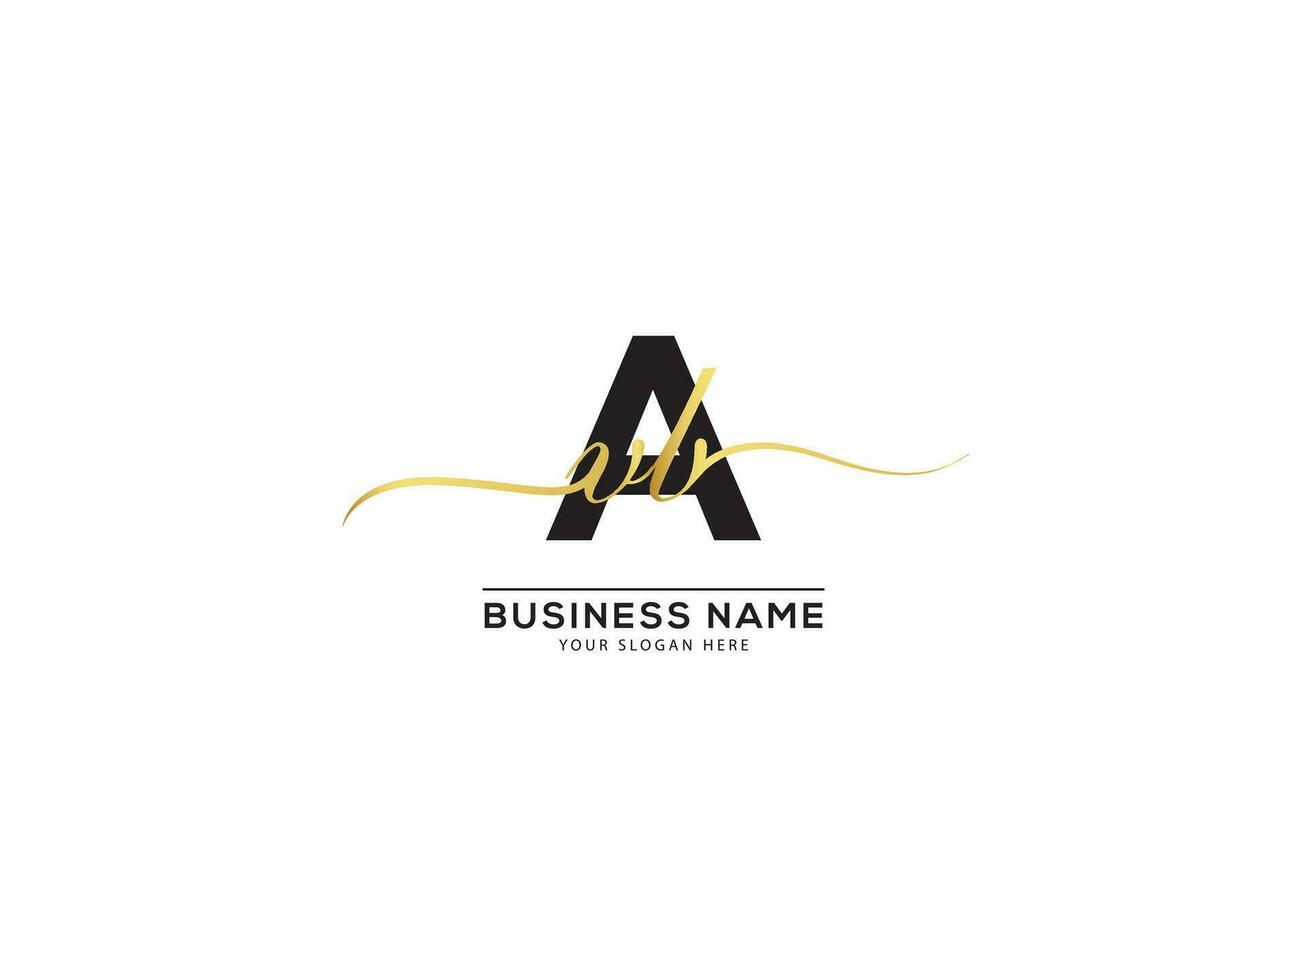 resumen firma avb lujo logo letra diseño vector